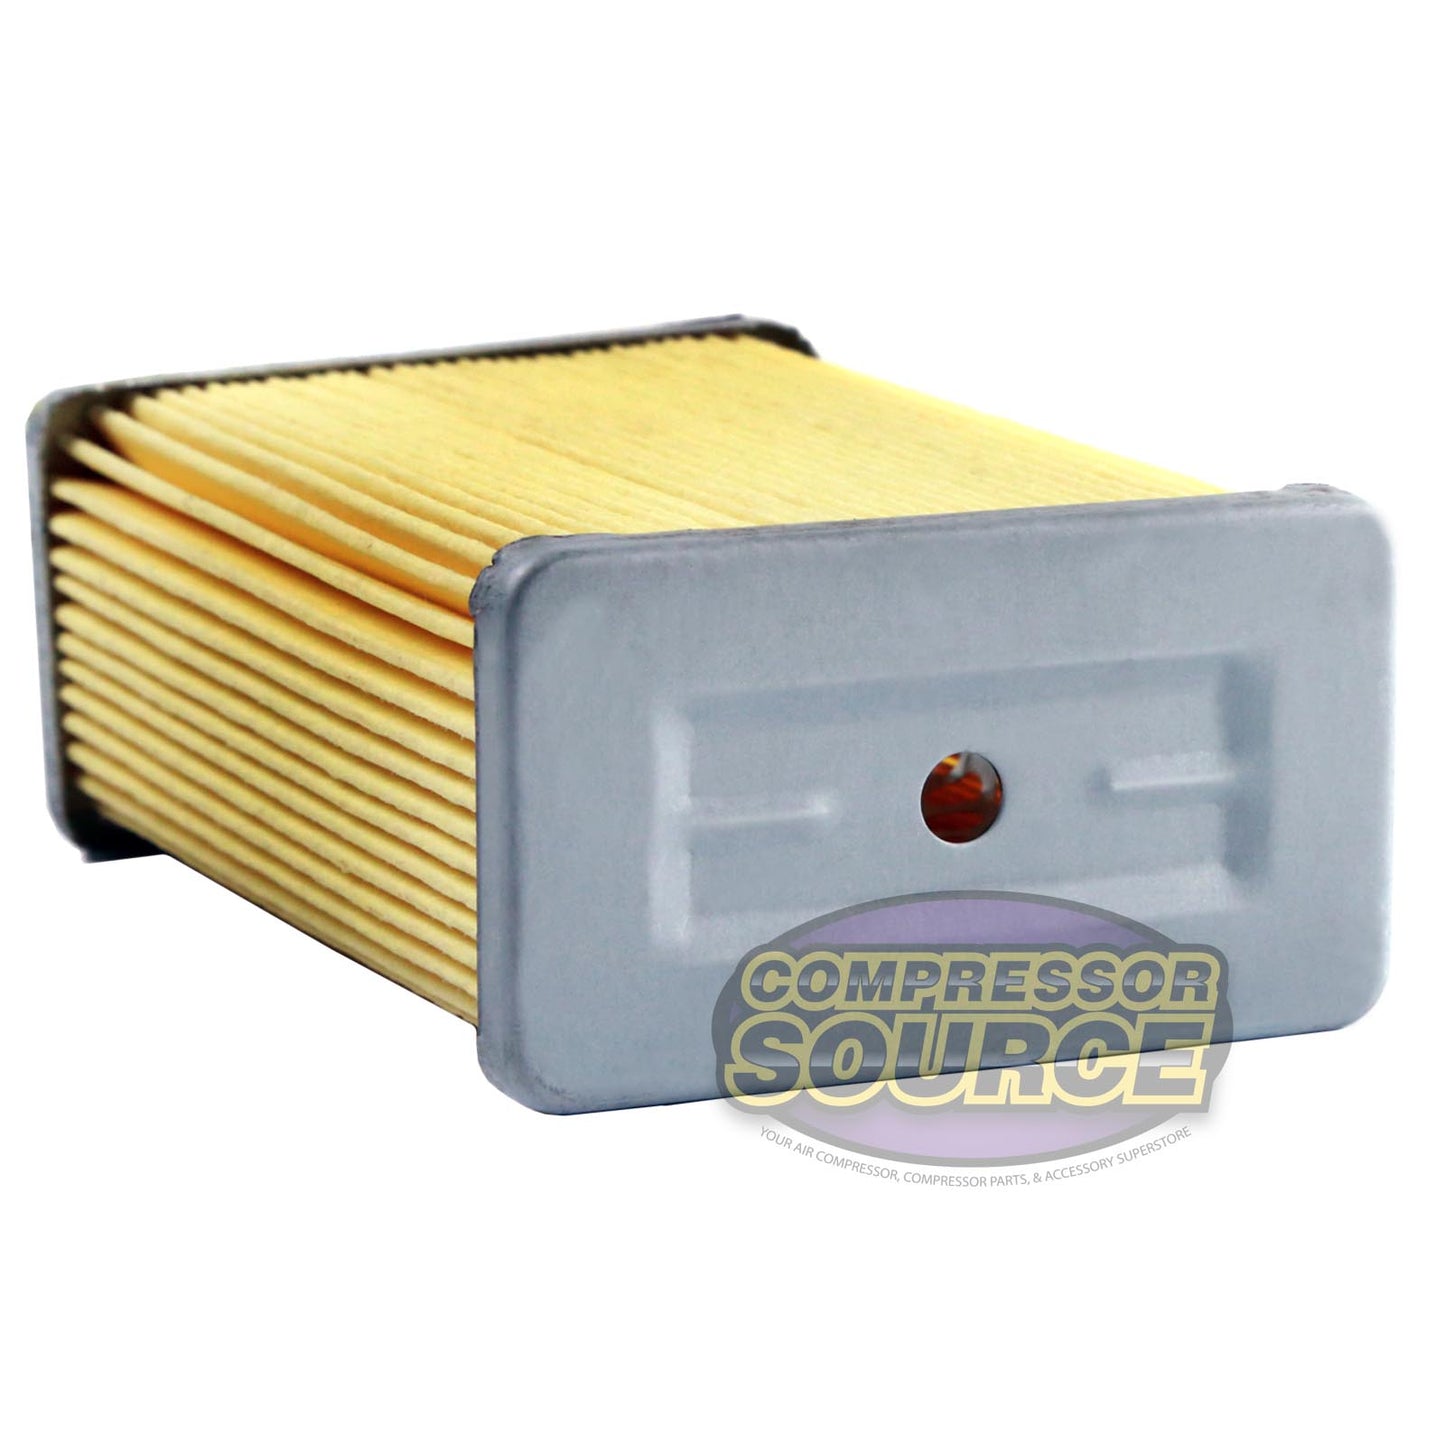 Curtis E-57 Air Compressor Intake Filter Element #70153 66142 or 26015540300